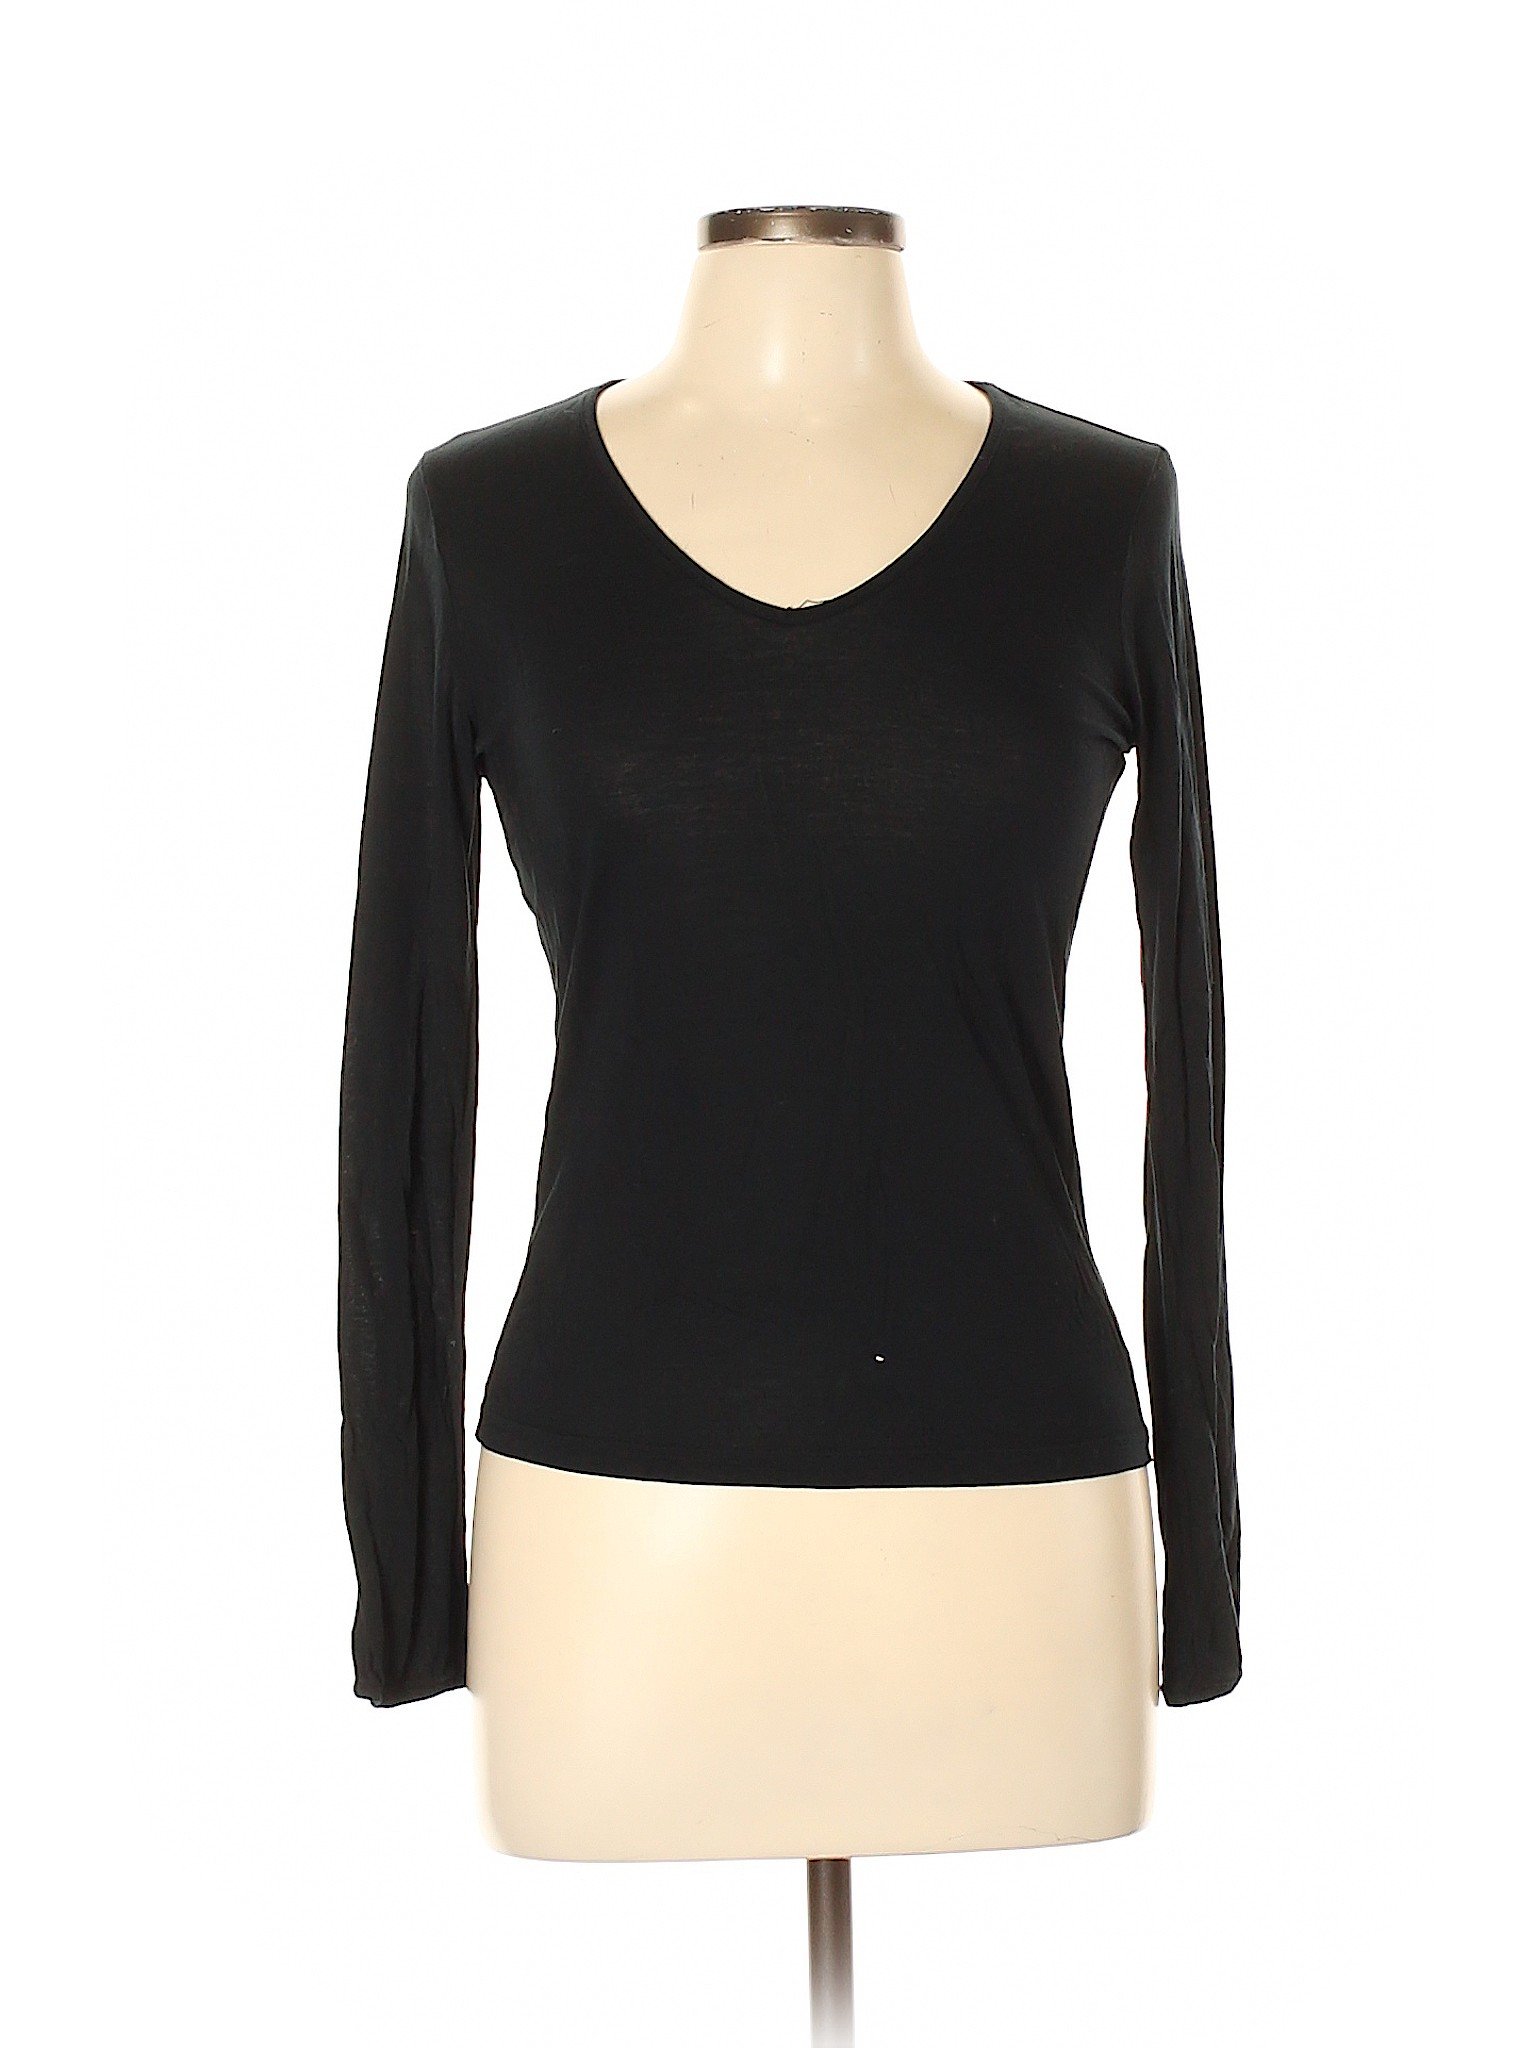 Gap Women Black Long Sleeve T Shirt L | eBay